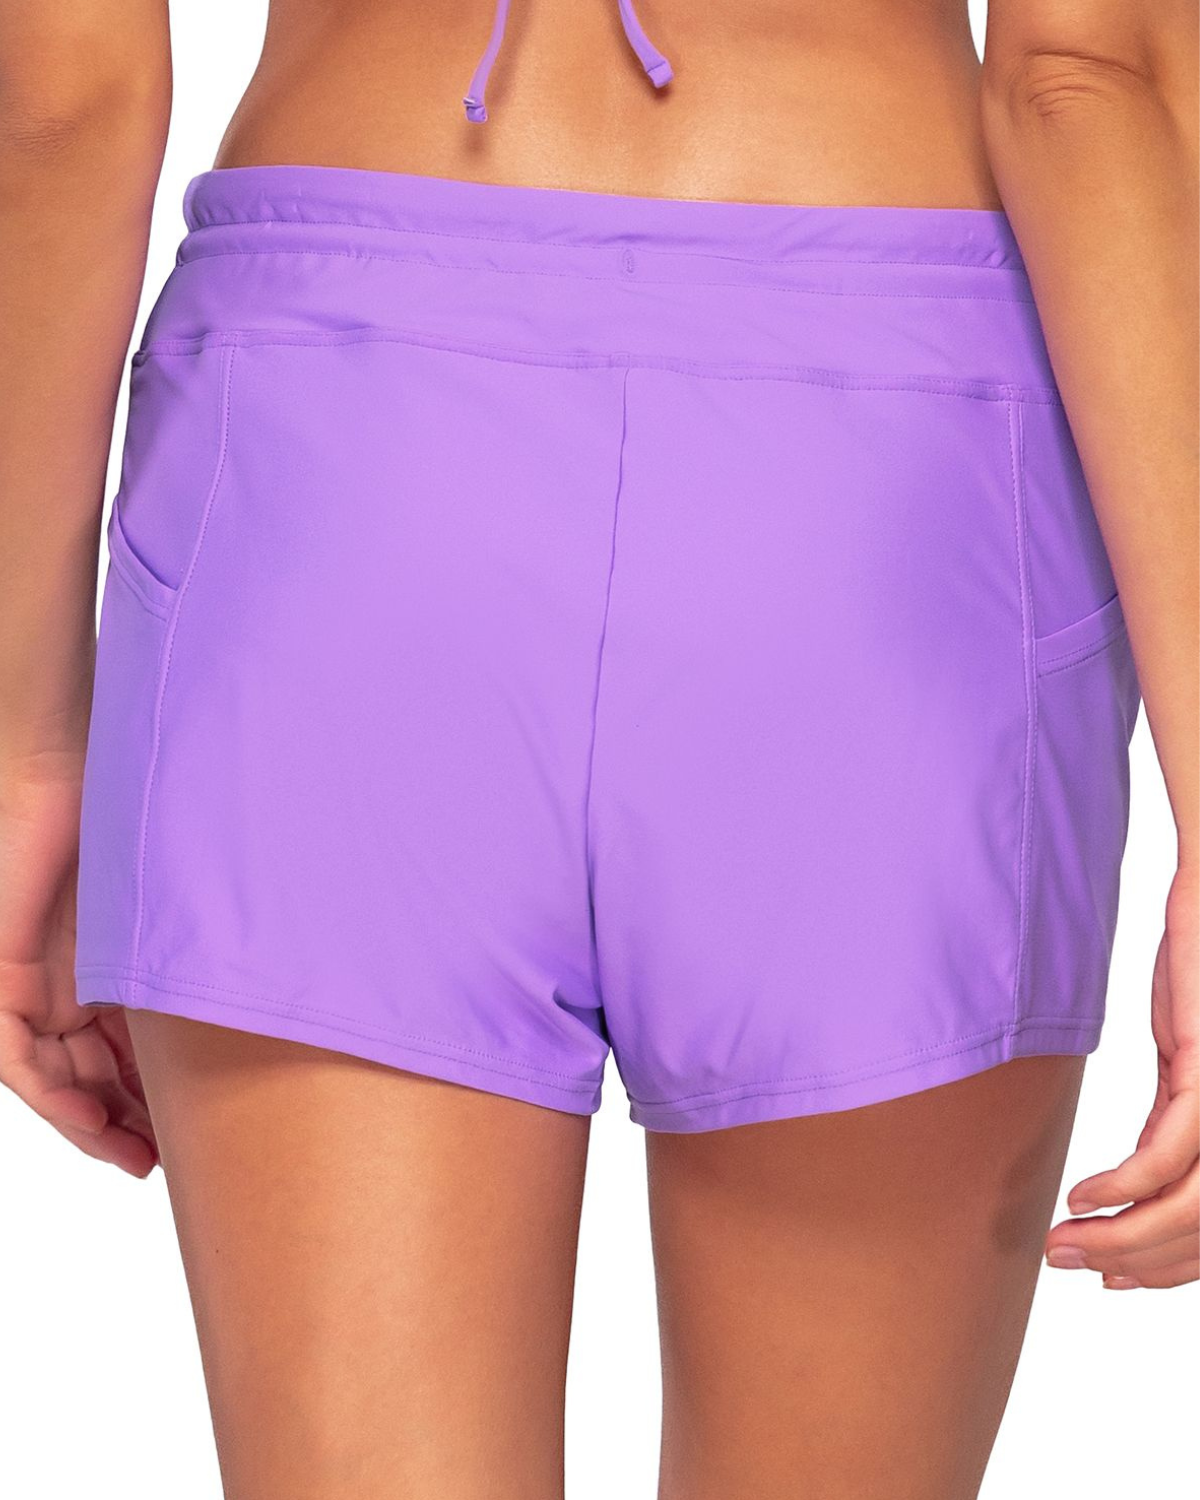 Model wearing a swim short with side pocket in lavender